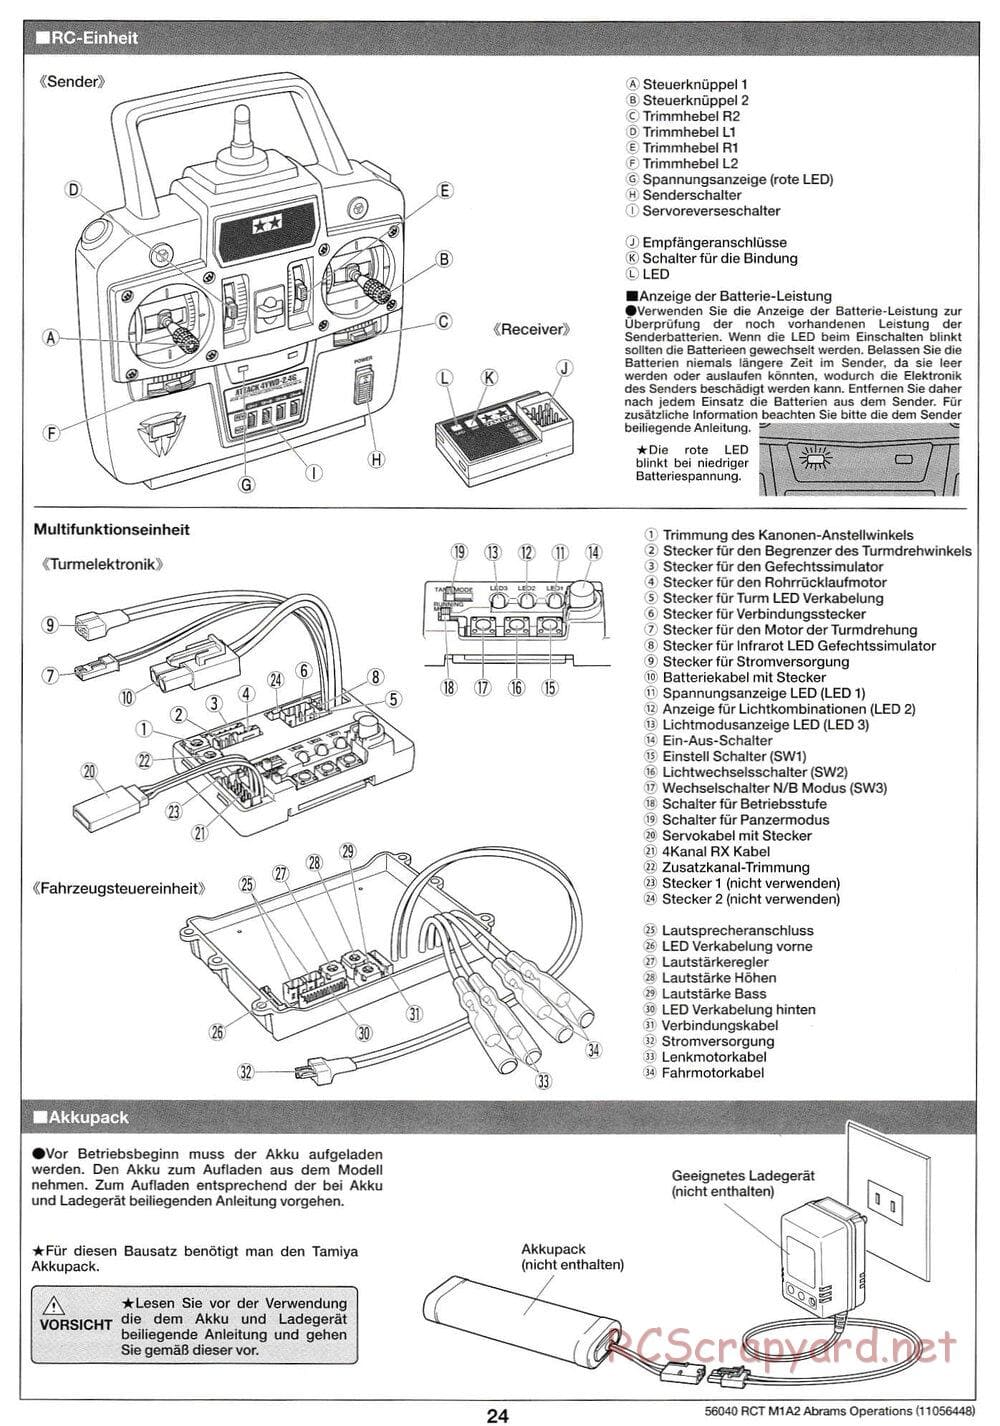 Tamiya - U.S. Main Battle Tank M1A2 Abrams - 1/16 Scale Chassis - Operation Manual - Page 2